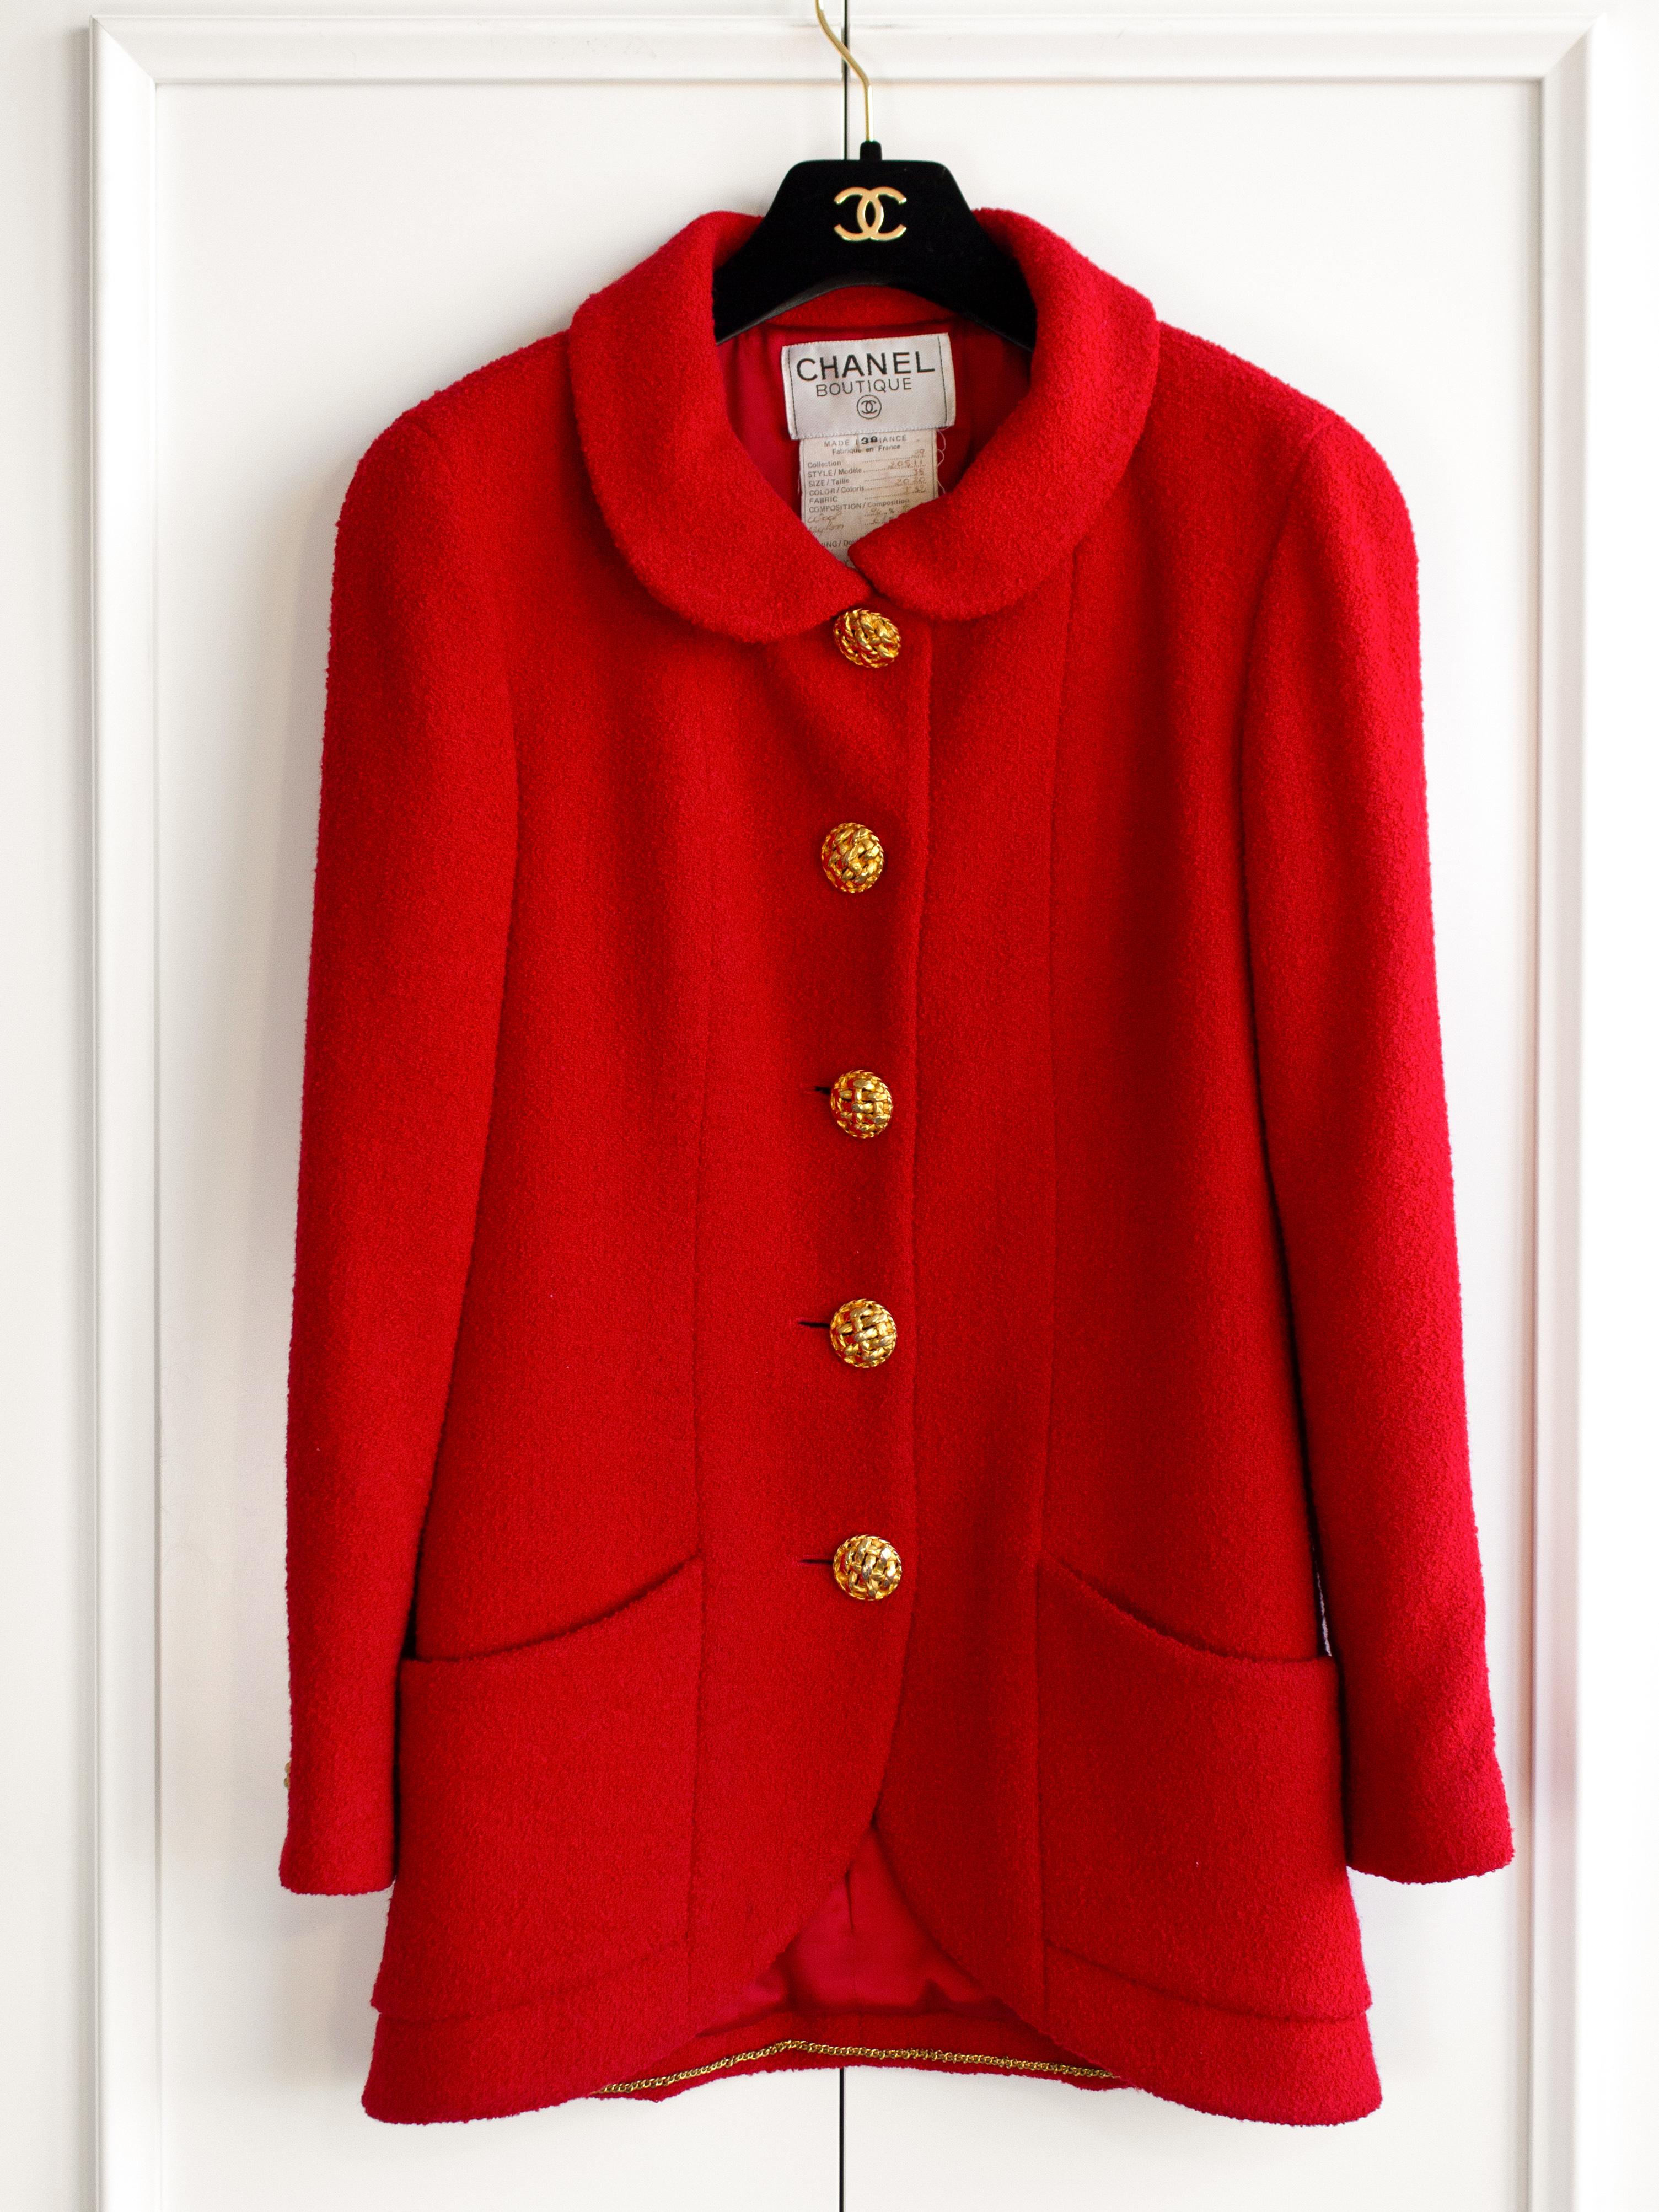 Chanel Vintage Fall/Winter 1992 Runway Parisian Red Gold Tweed Jacket Skirt Suit 2